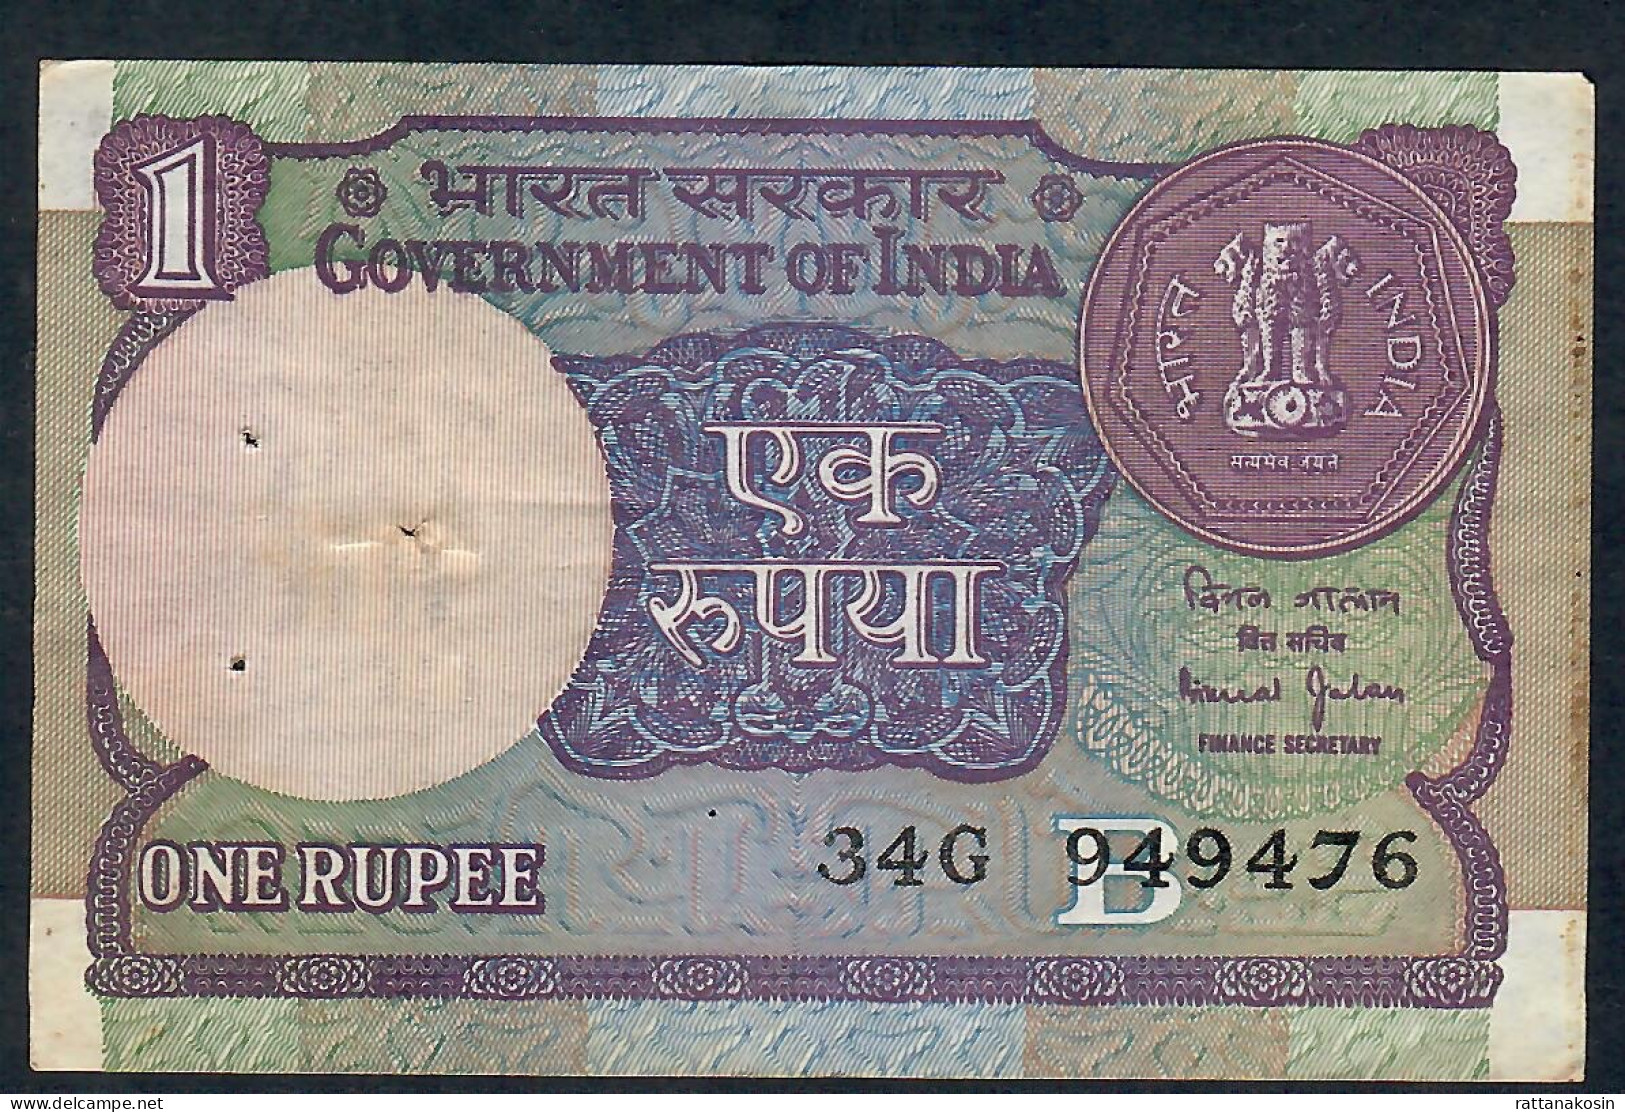 INDIA P78Aj 1 RUPEE 1990  LETTER B Signature JALAN #34G   VF - Inde